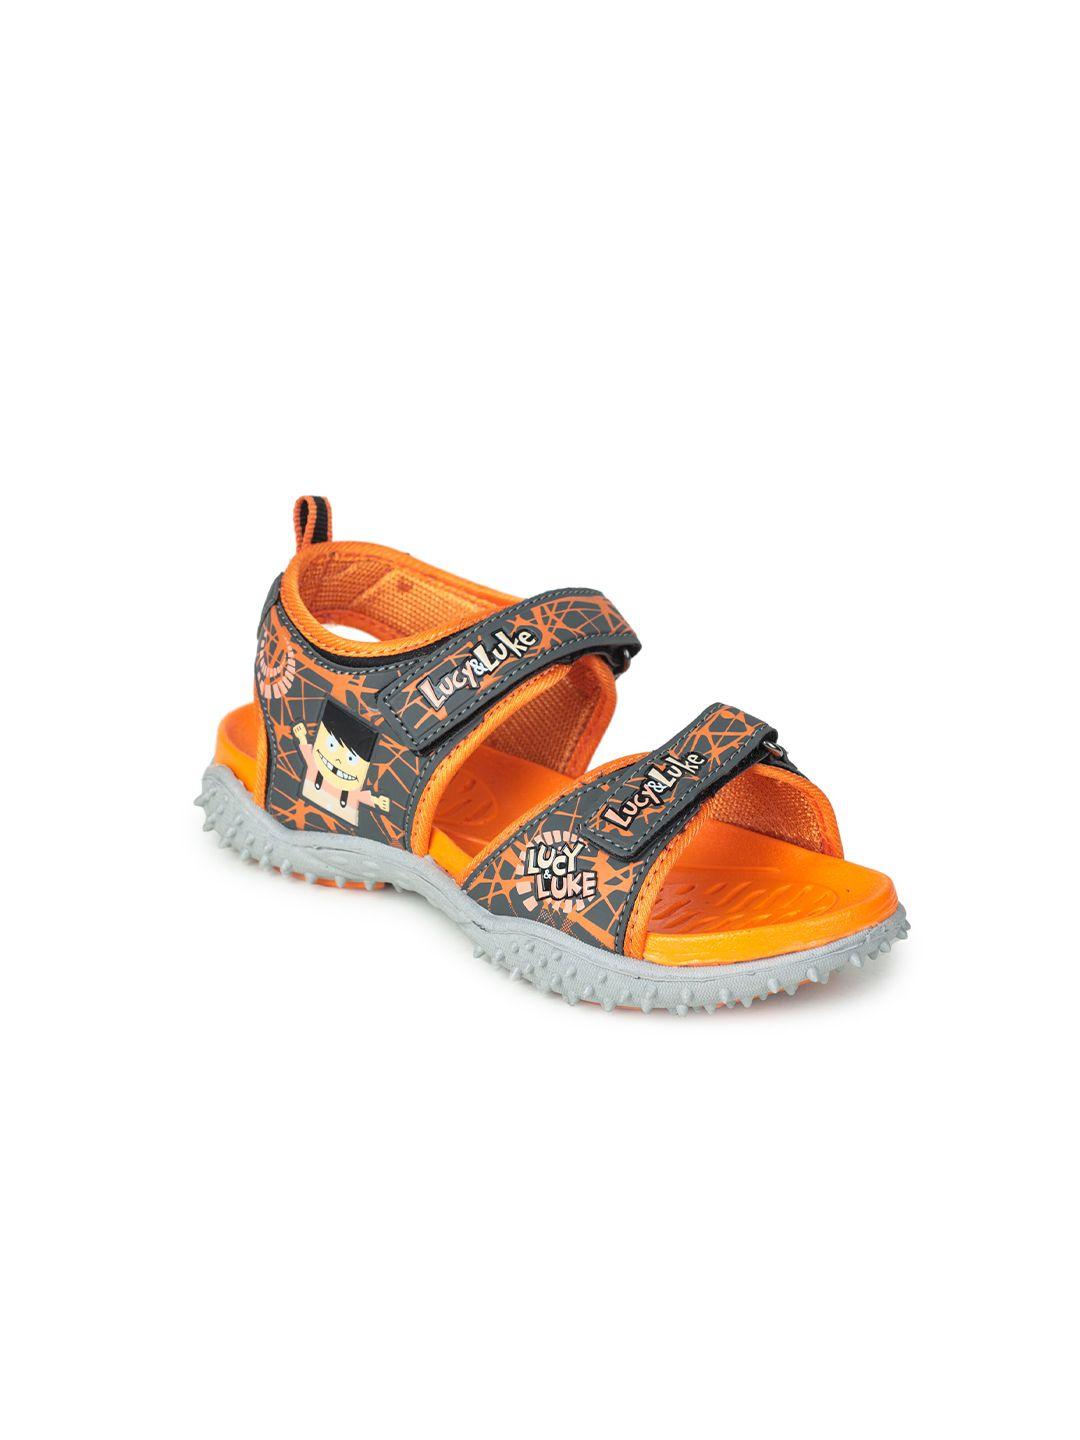 liberty kids orange comfort sandals